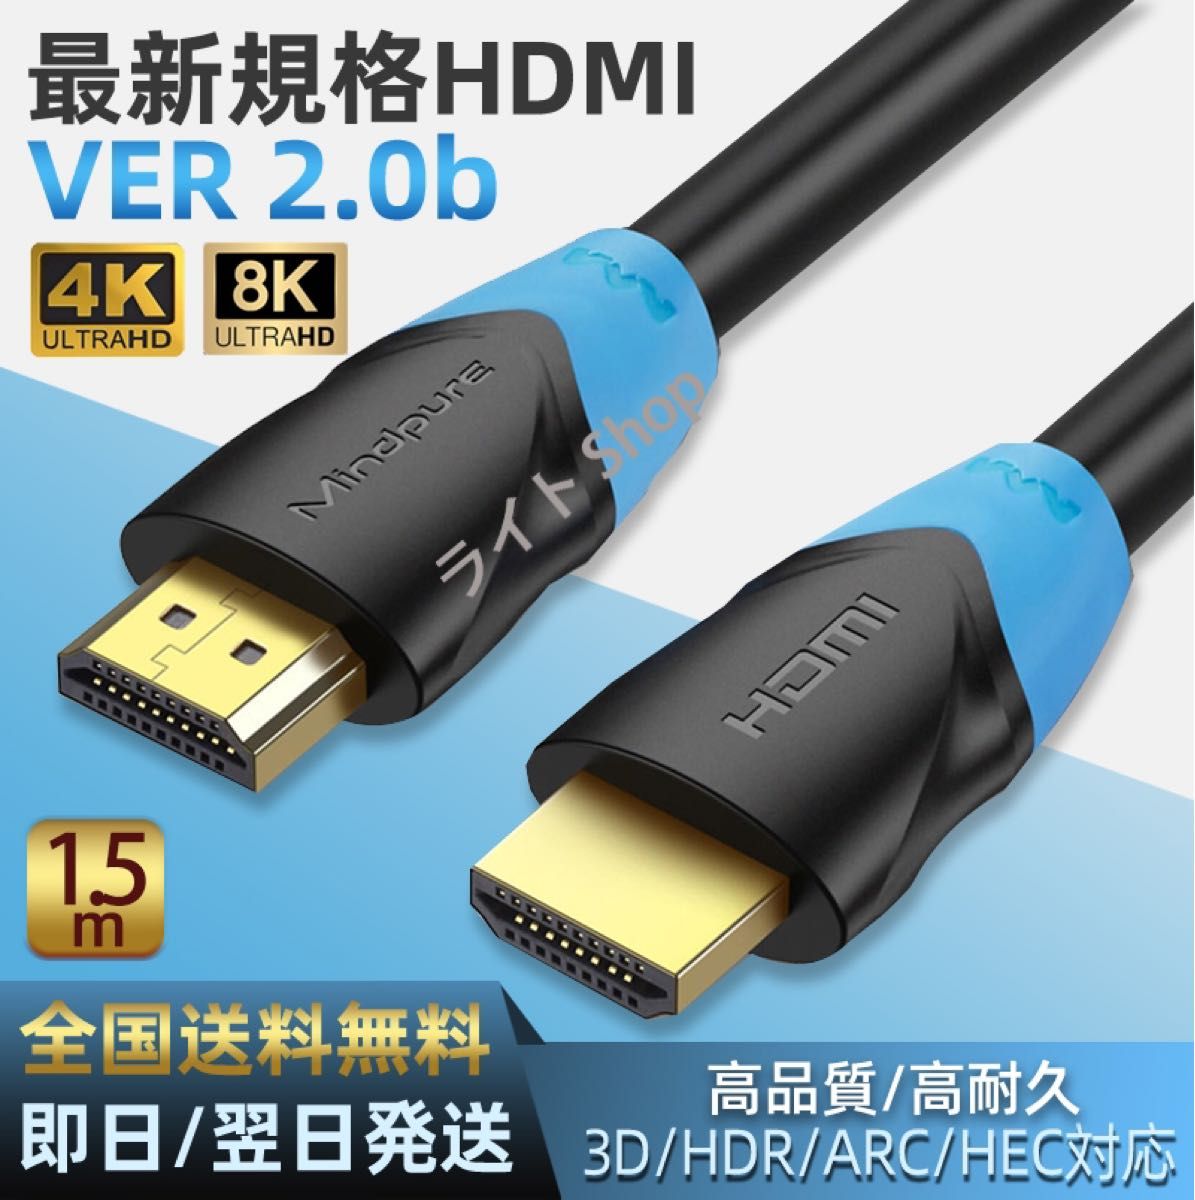 HDMIケーブル 4K 1.5m 2.0規格 ハイスピード HDMI ケーブル